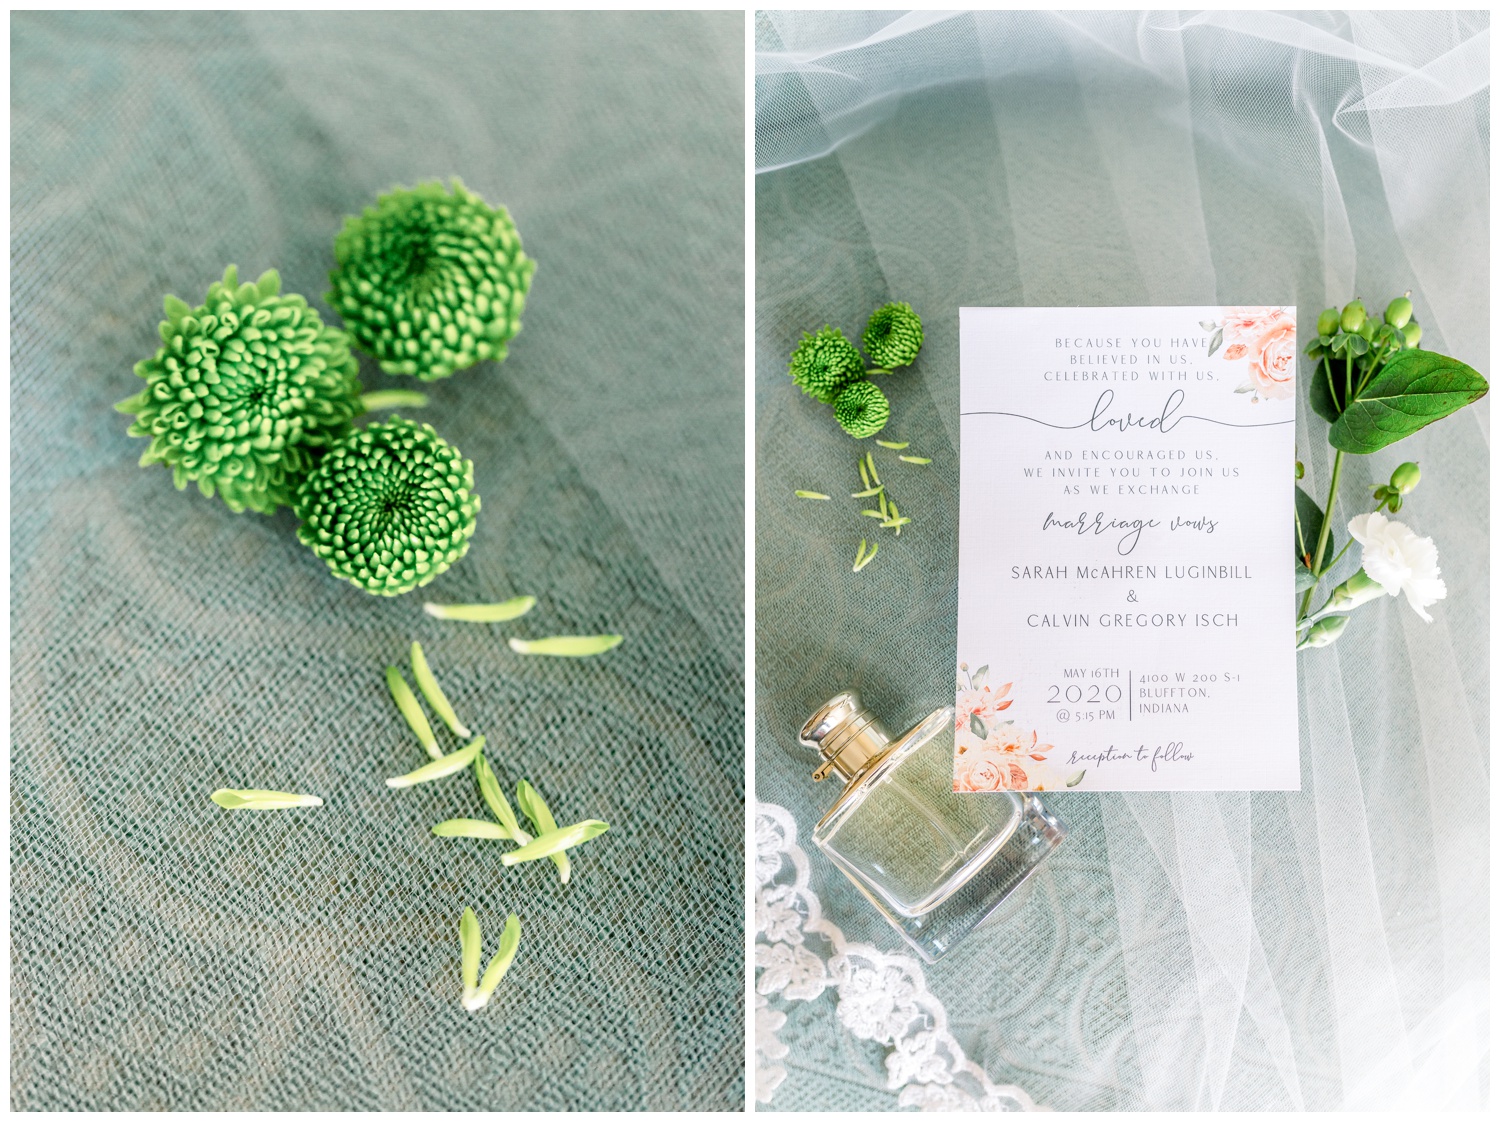 Micro Wedding Details - Wedding Invitation and Flowers